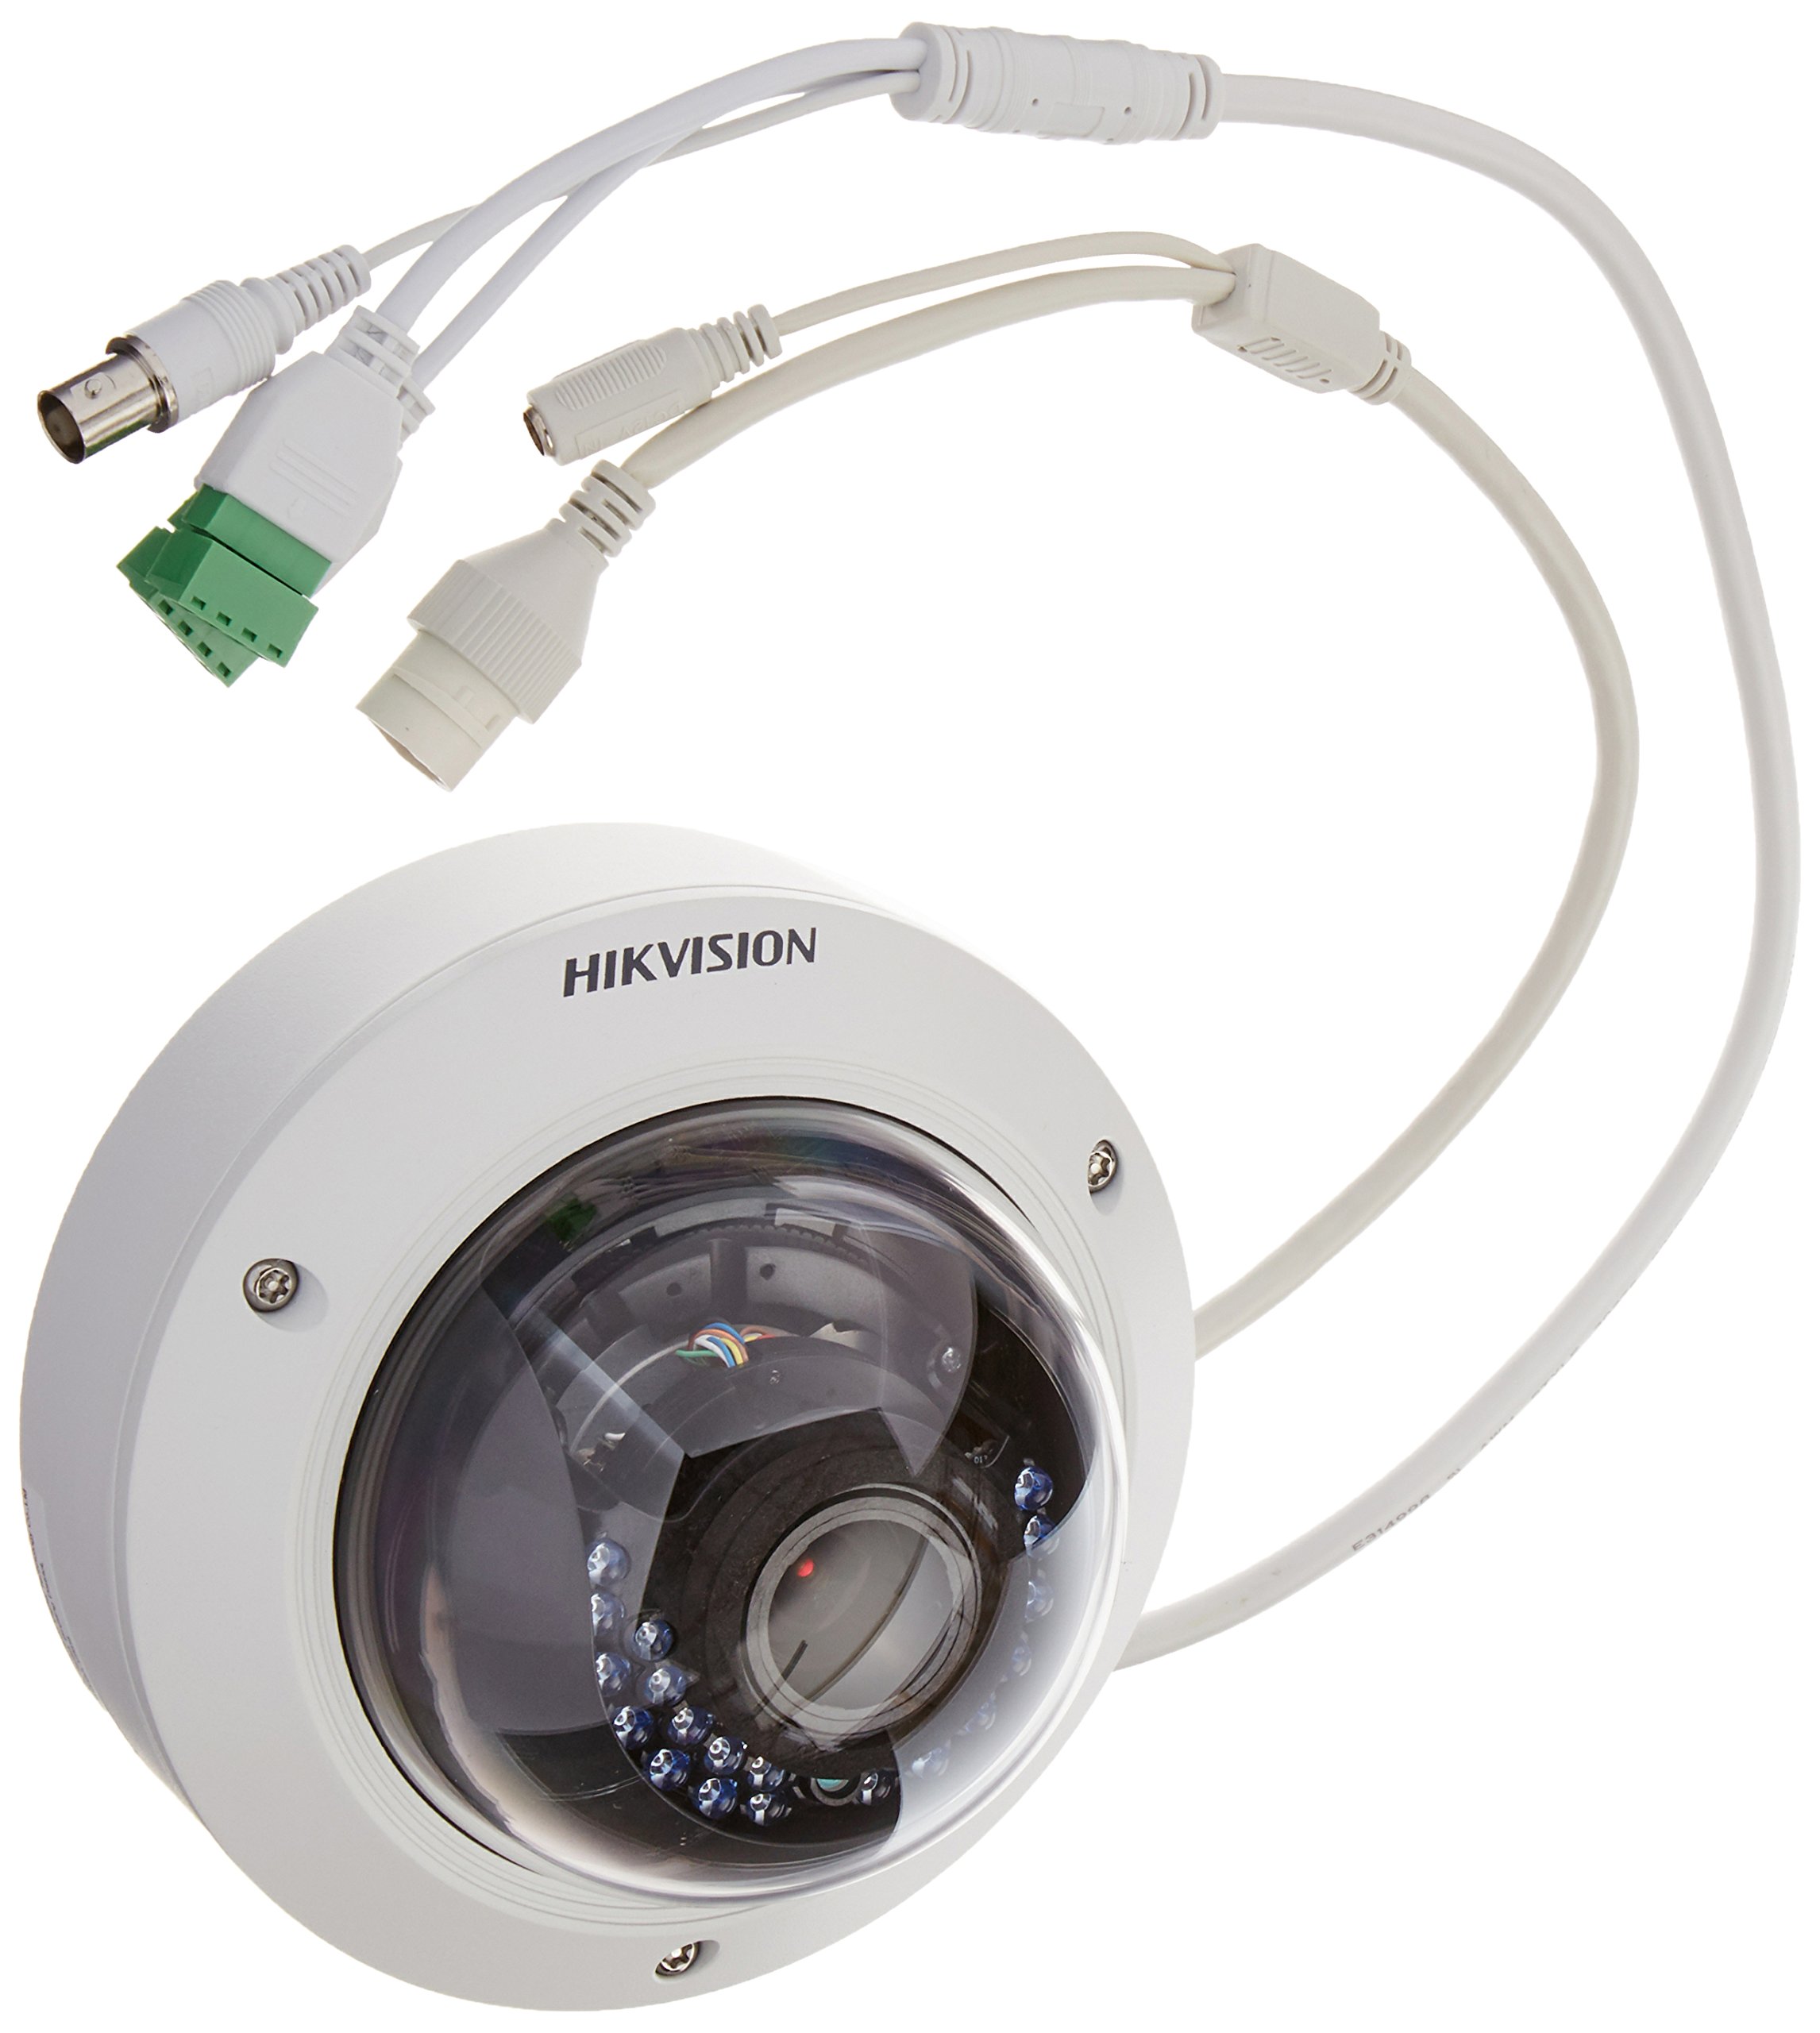 HIKVISION HD Smart 4 Megapixel PoE Dome IP Outdoor Surveillance Camera, 2.8mm-12mm Zoom Lens, White (US Version)